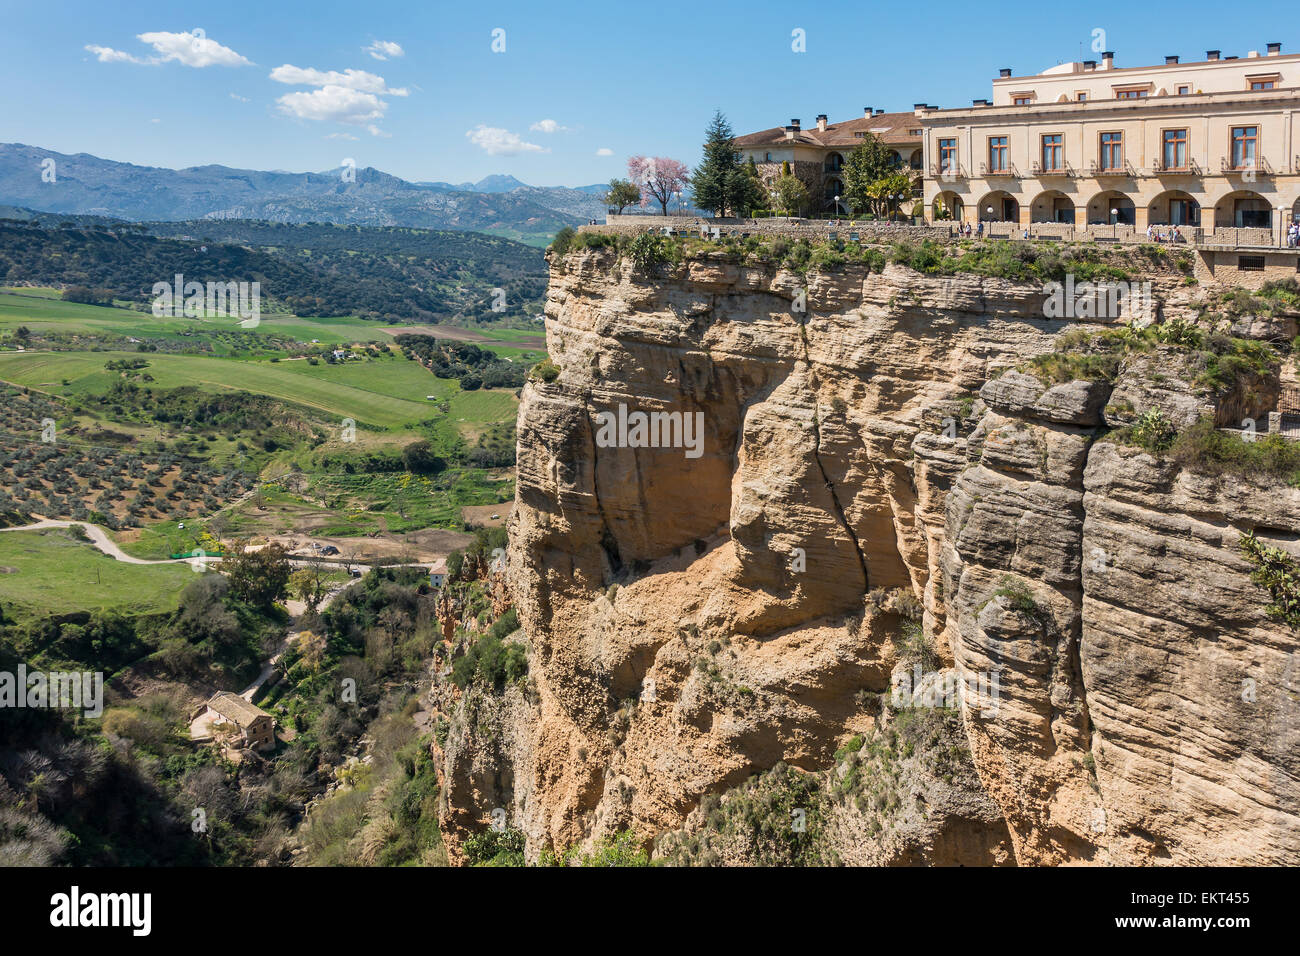 Hotel Paradore Ronda Sierra Nevada Mountains Spain Stock Photo